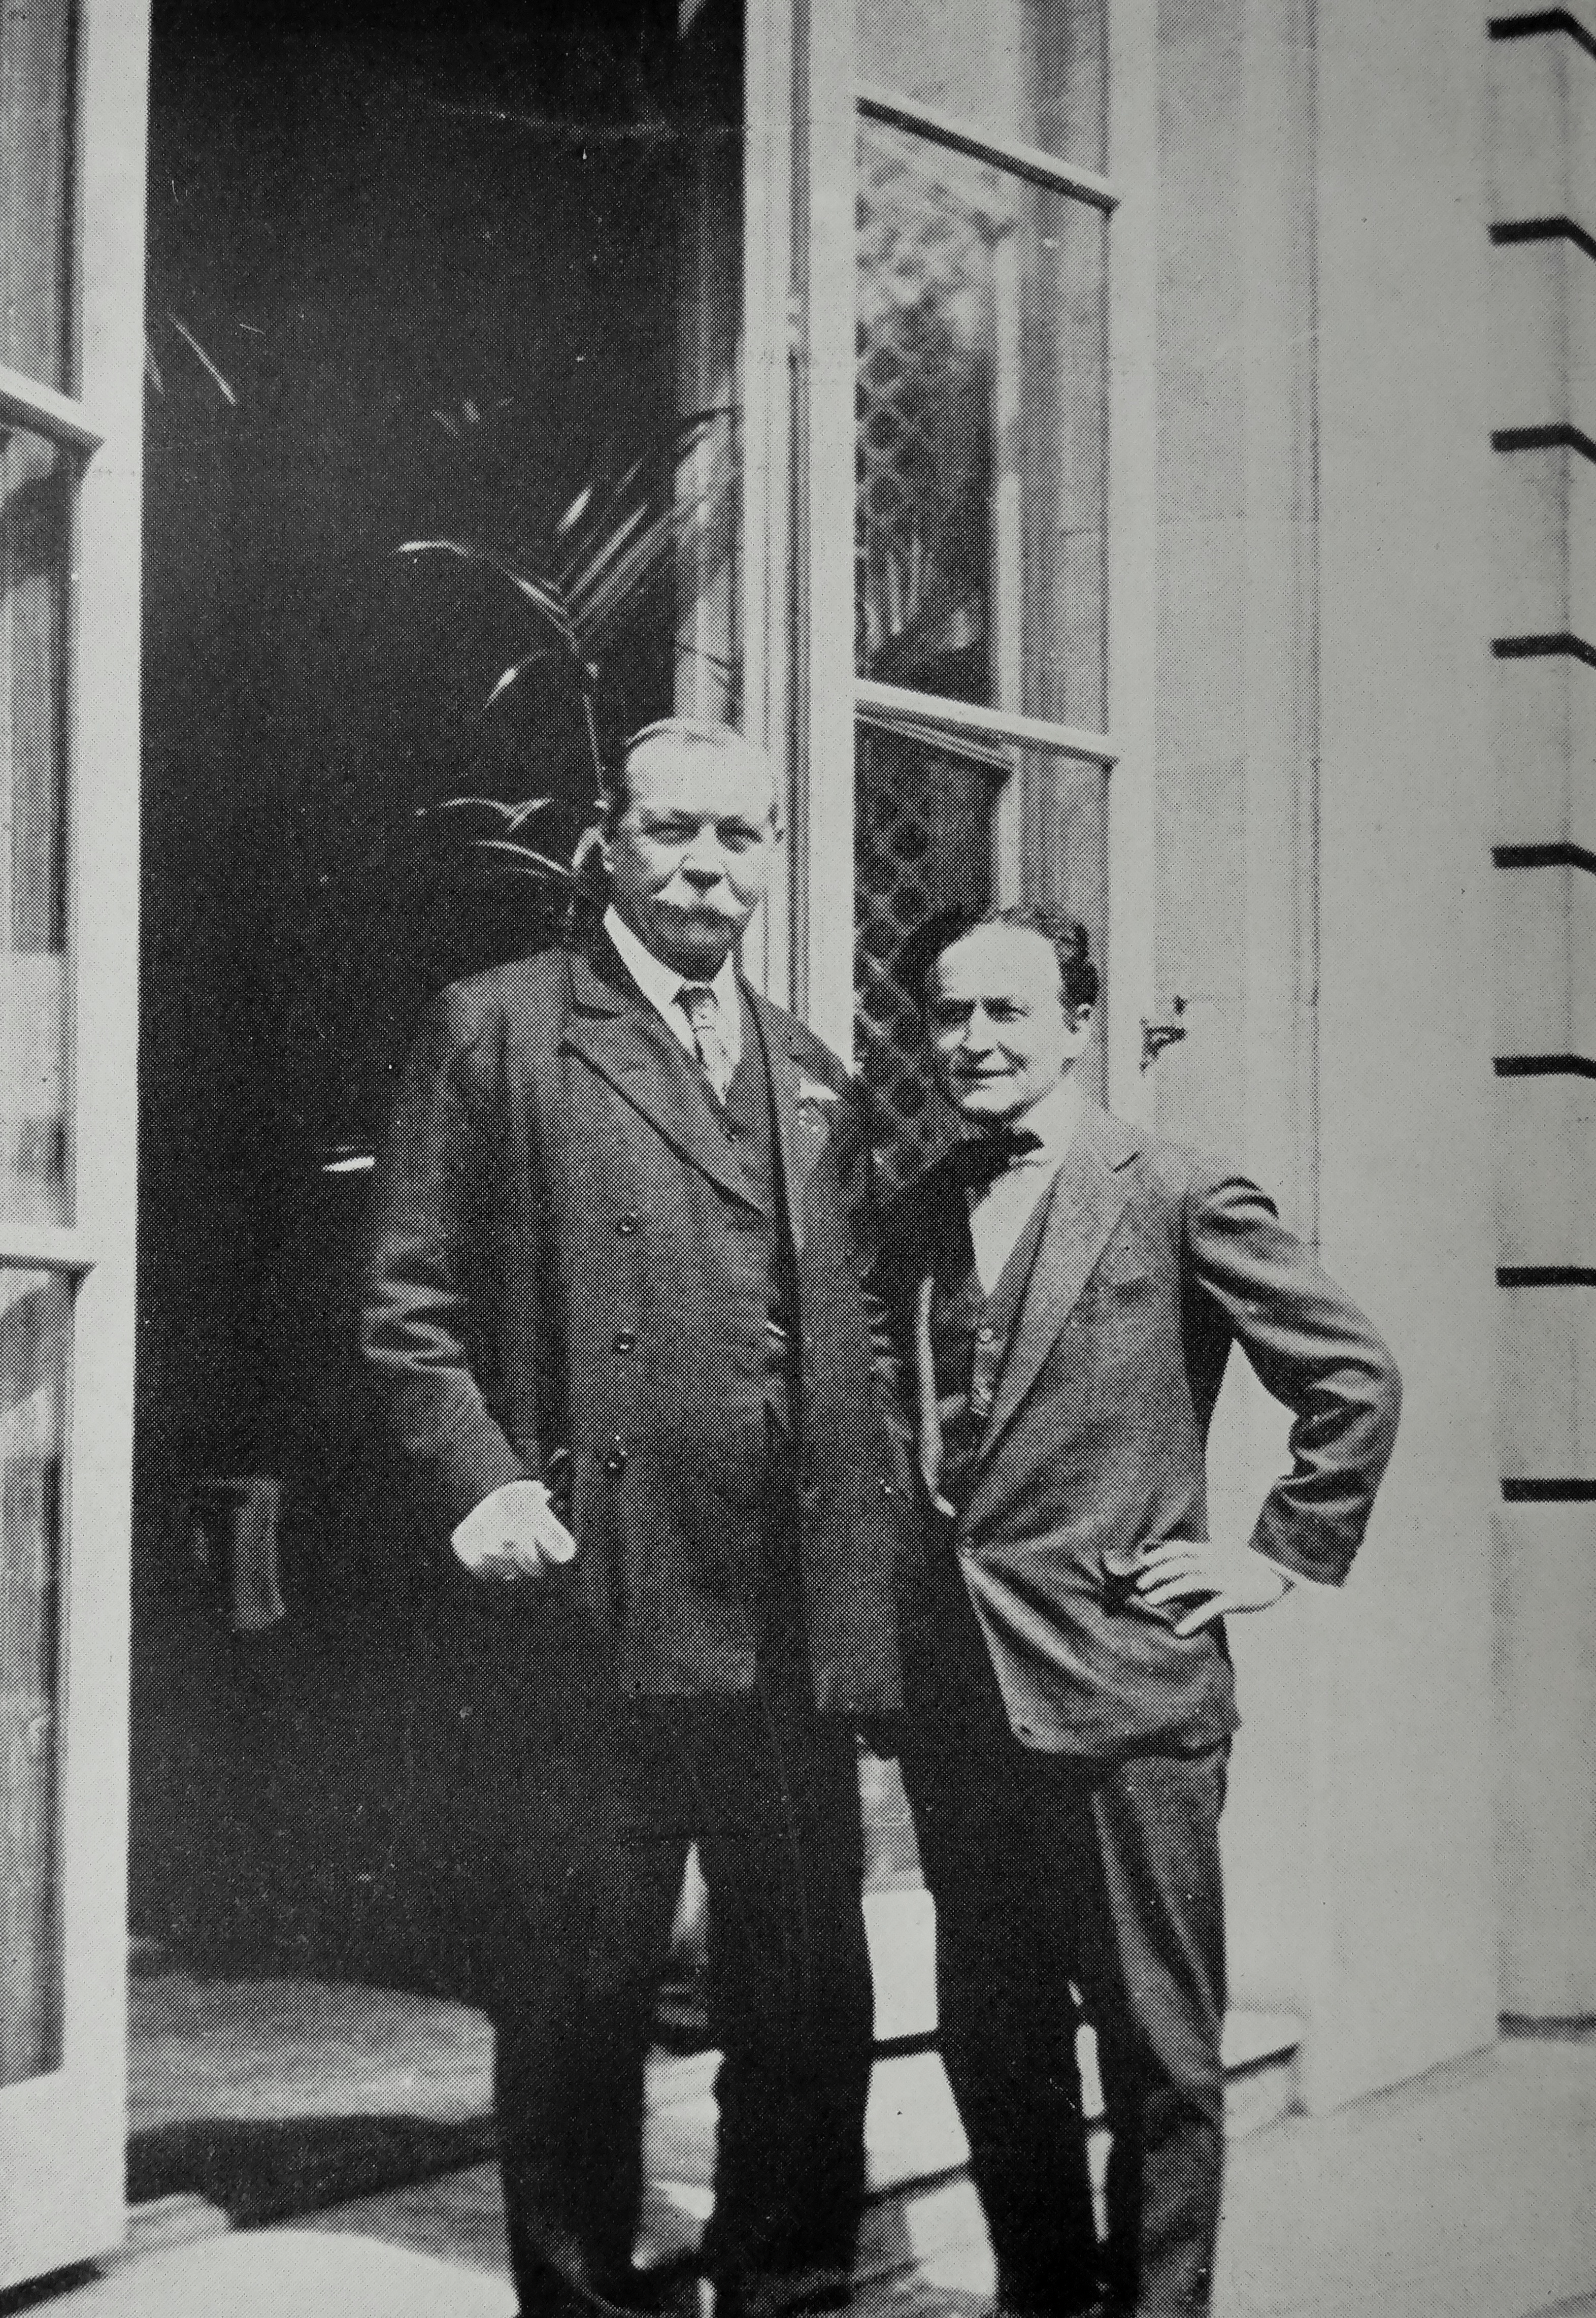 Photo of Arthur Conan Doyle and Harry Houdini in Houdini's book "A Magician Among the Spirits" (1924)